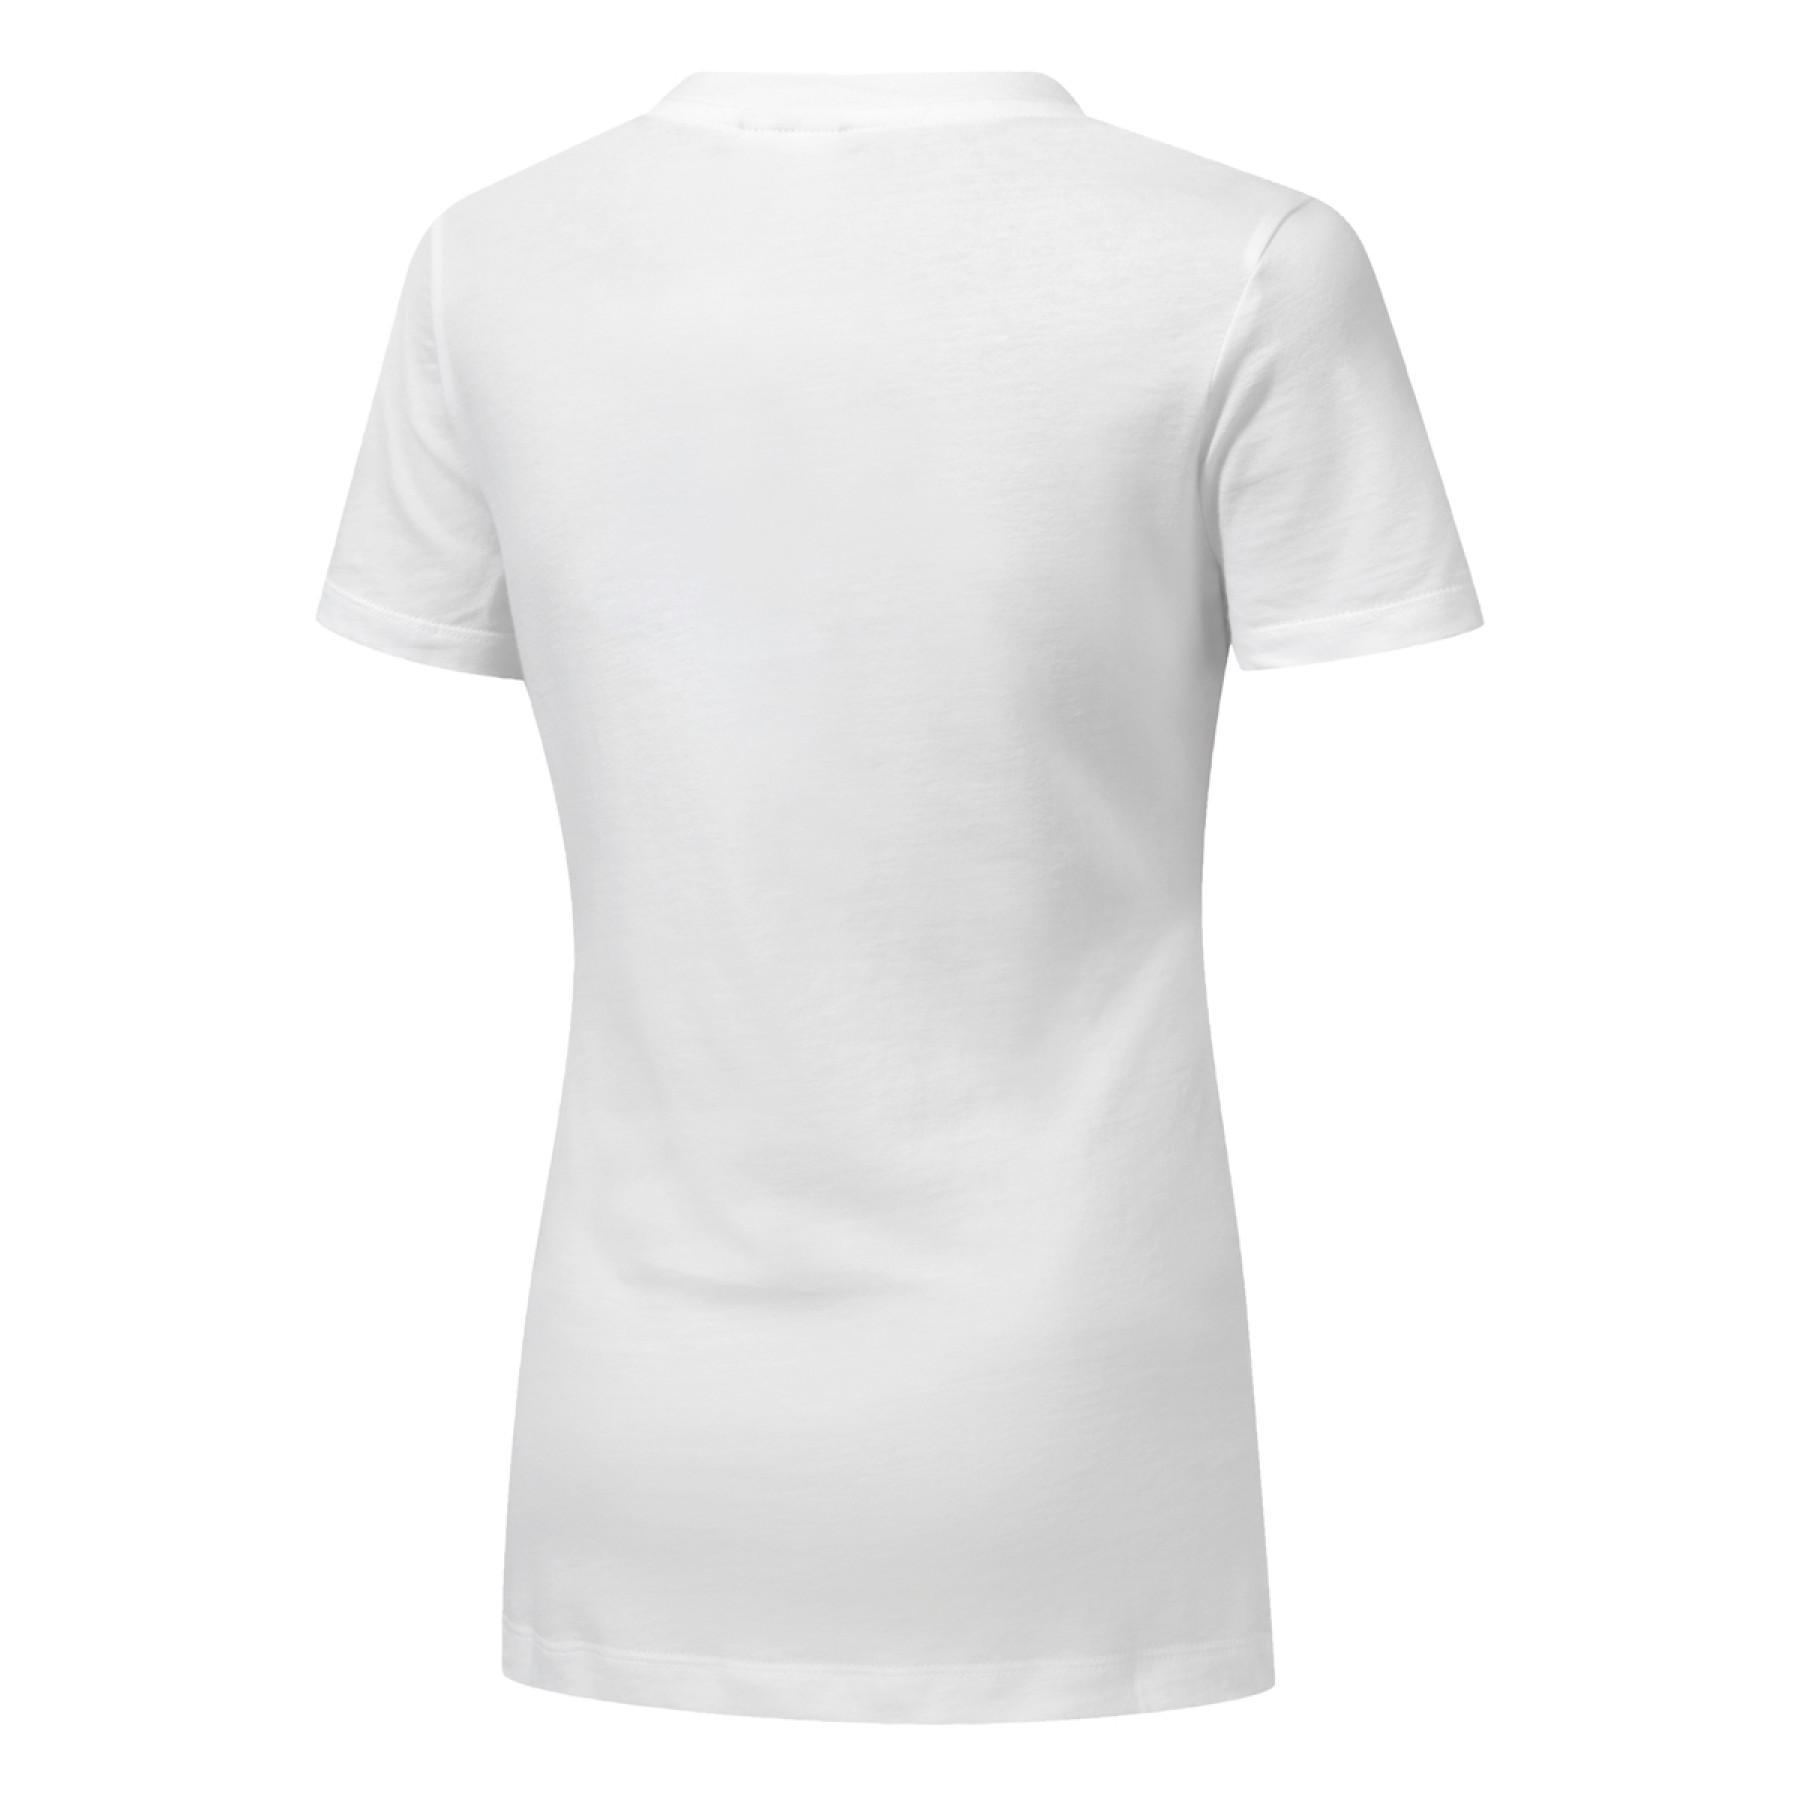 Dames-T-shirt Reebok GB Cotton V-Neck Vector